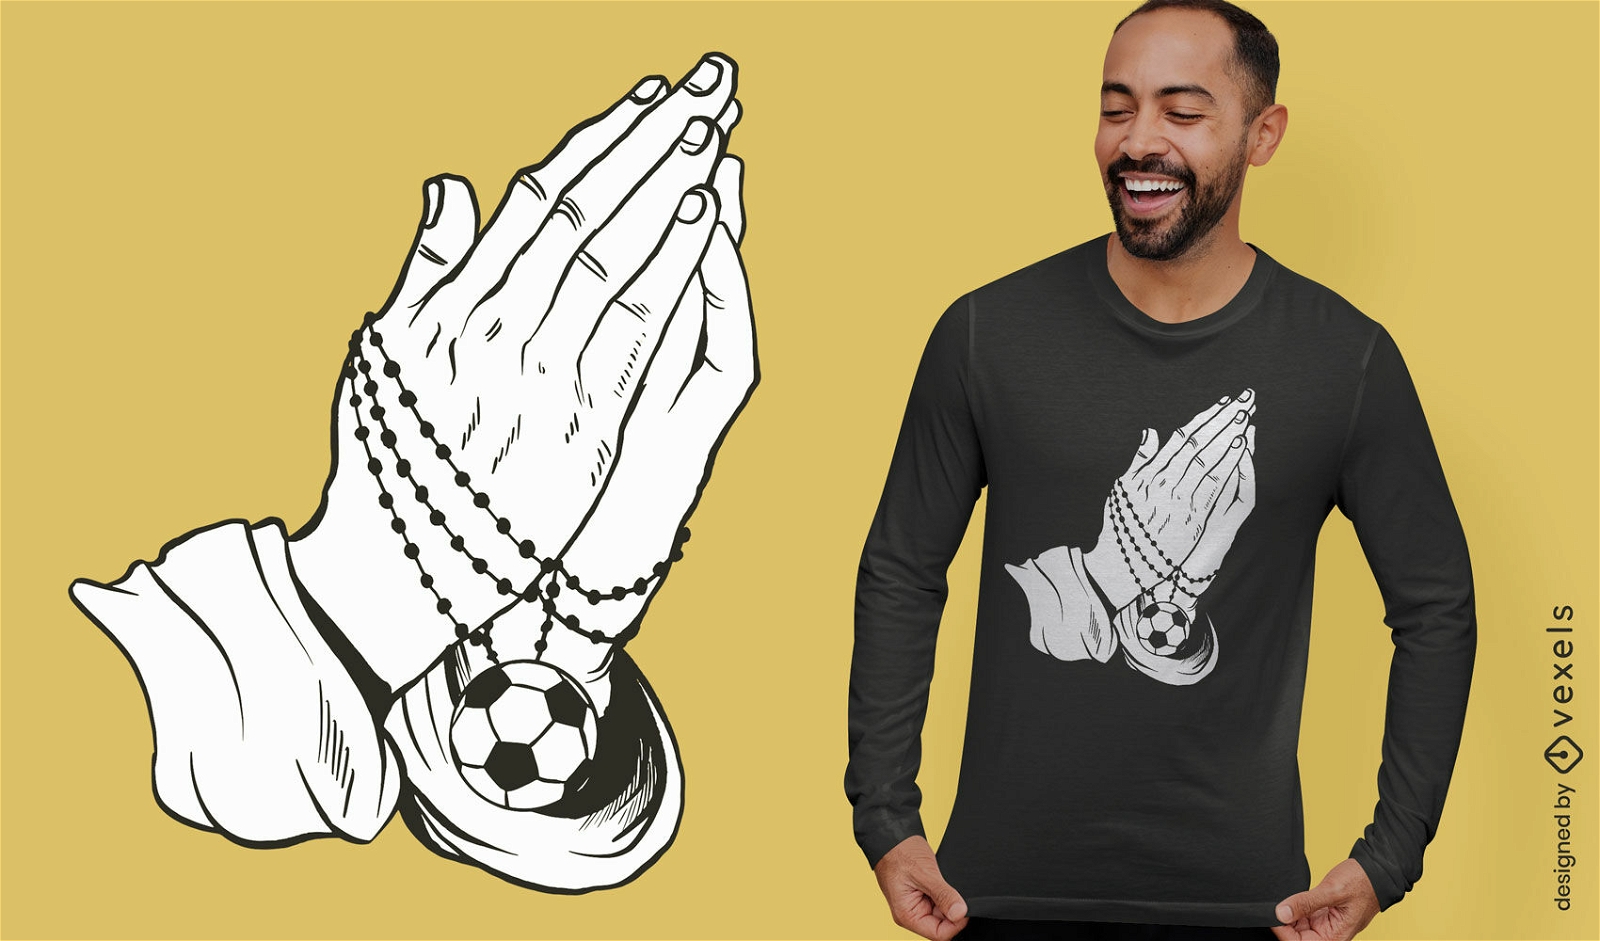 Dise?o de camiseta de f?tbol de manos rezando.